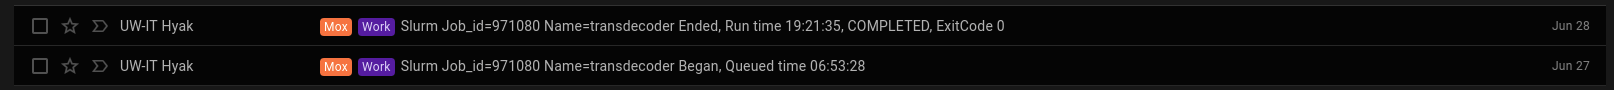 Screencap of Mox Transdecoder run time